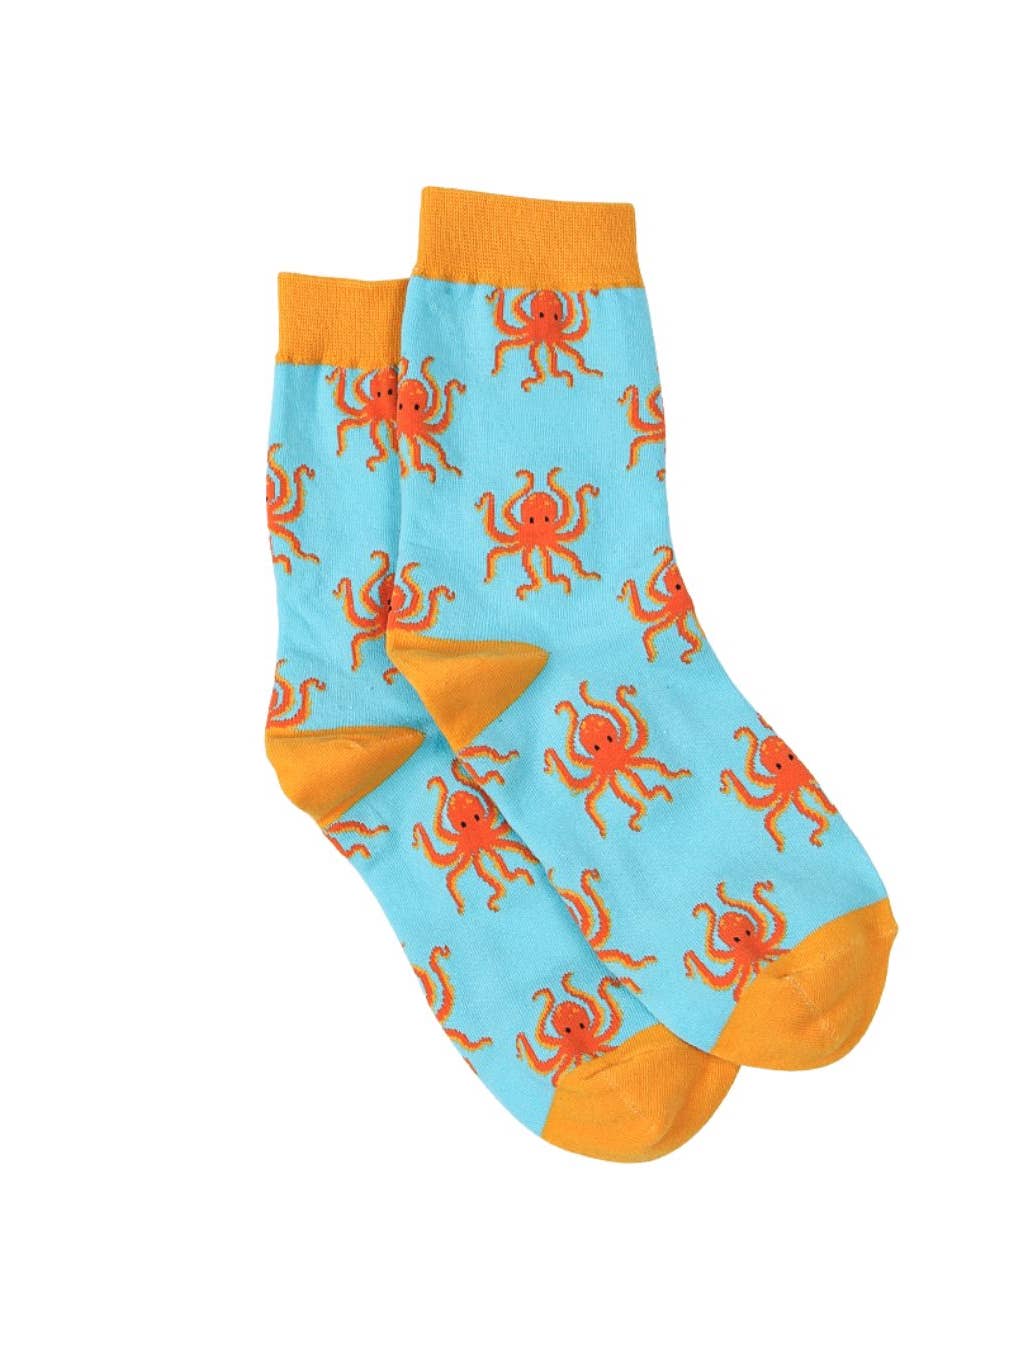 Mens Bamboo Socks Octopus Animal Novelty Dress Socks Blue